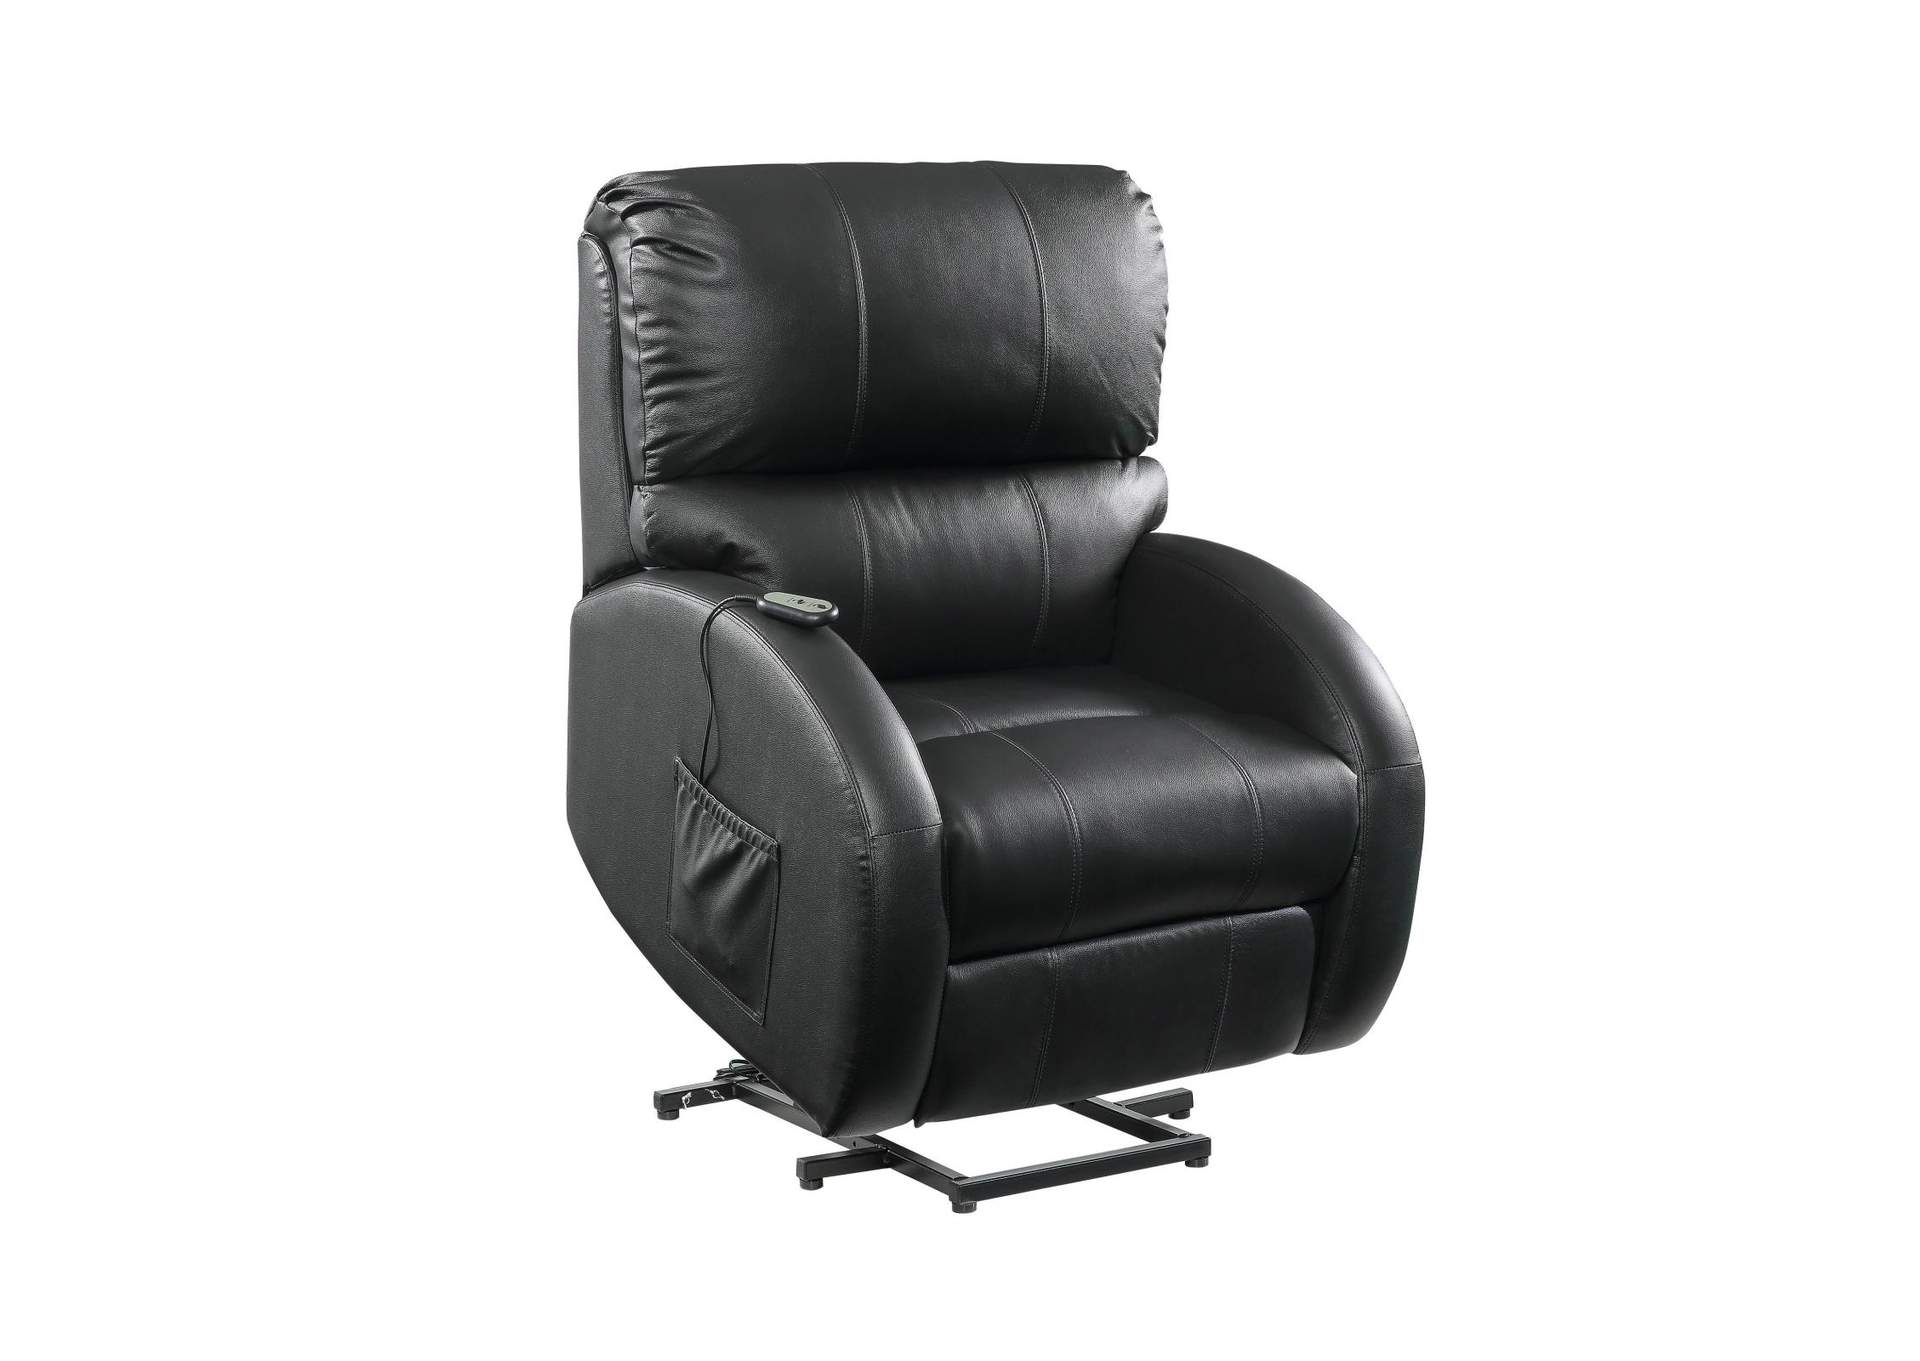 Upholstered Power Lift Recliner Black,Coaster Furniture